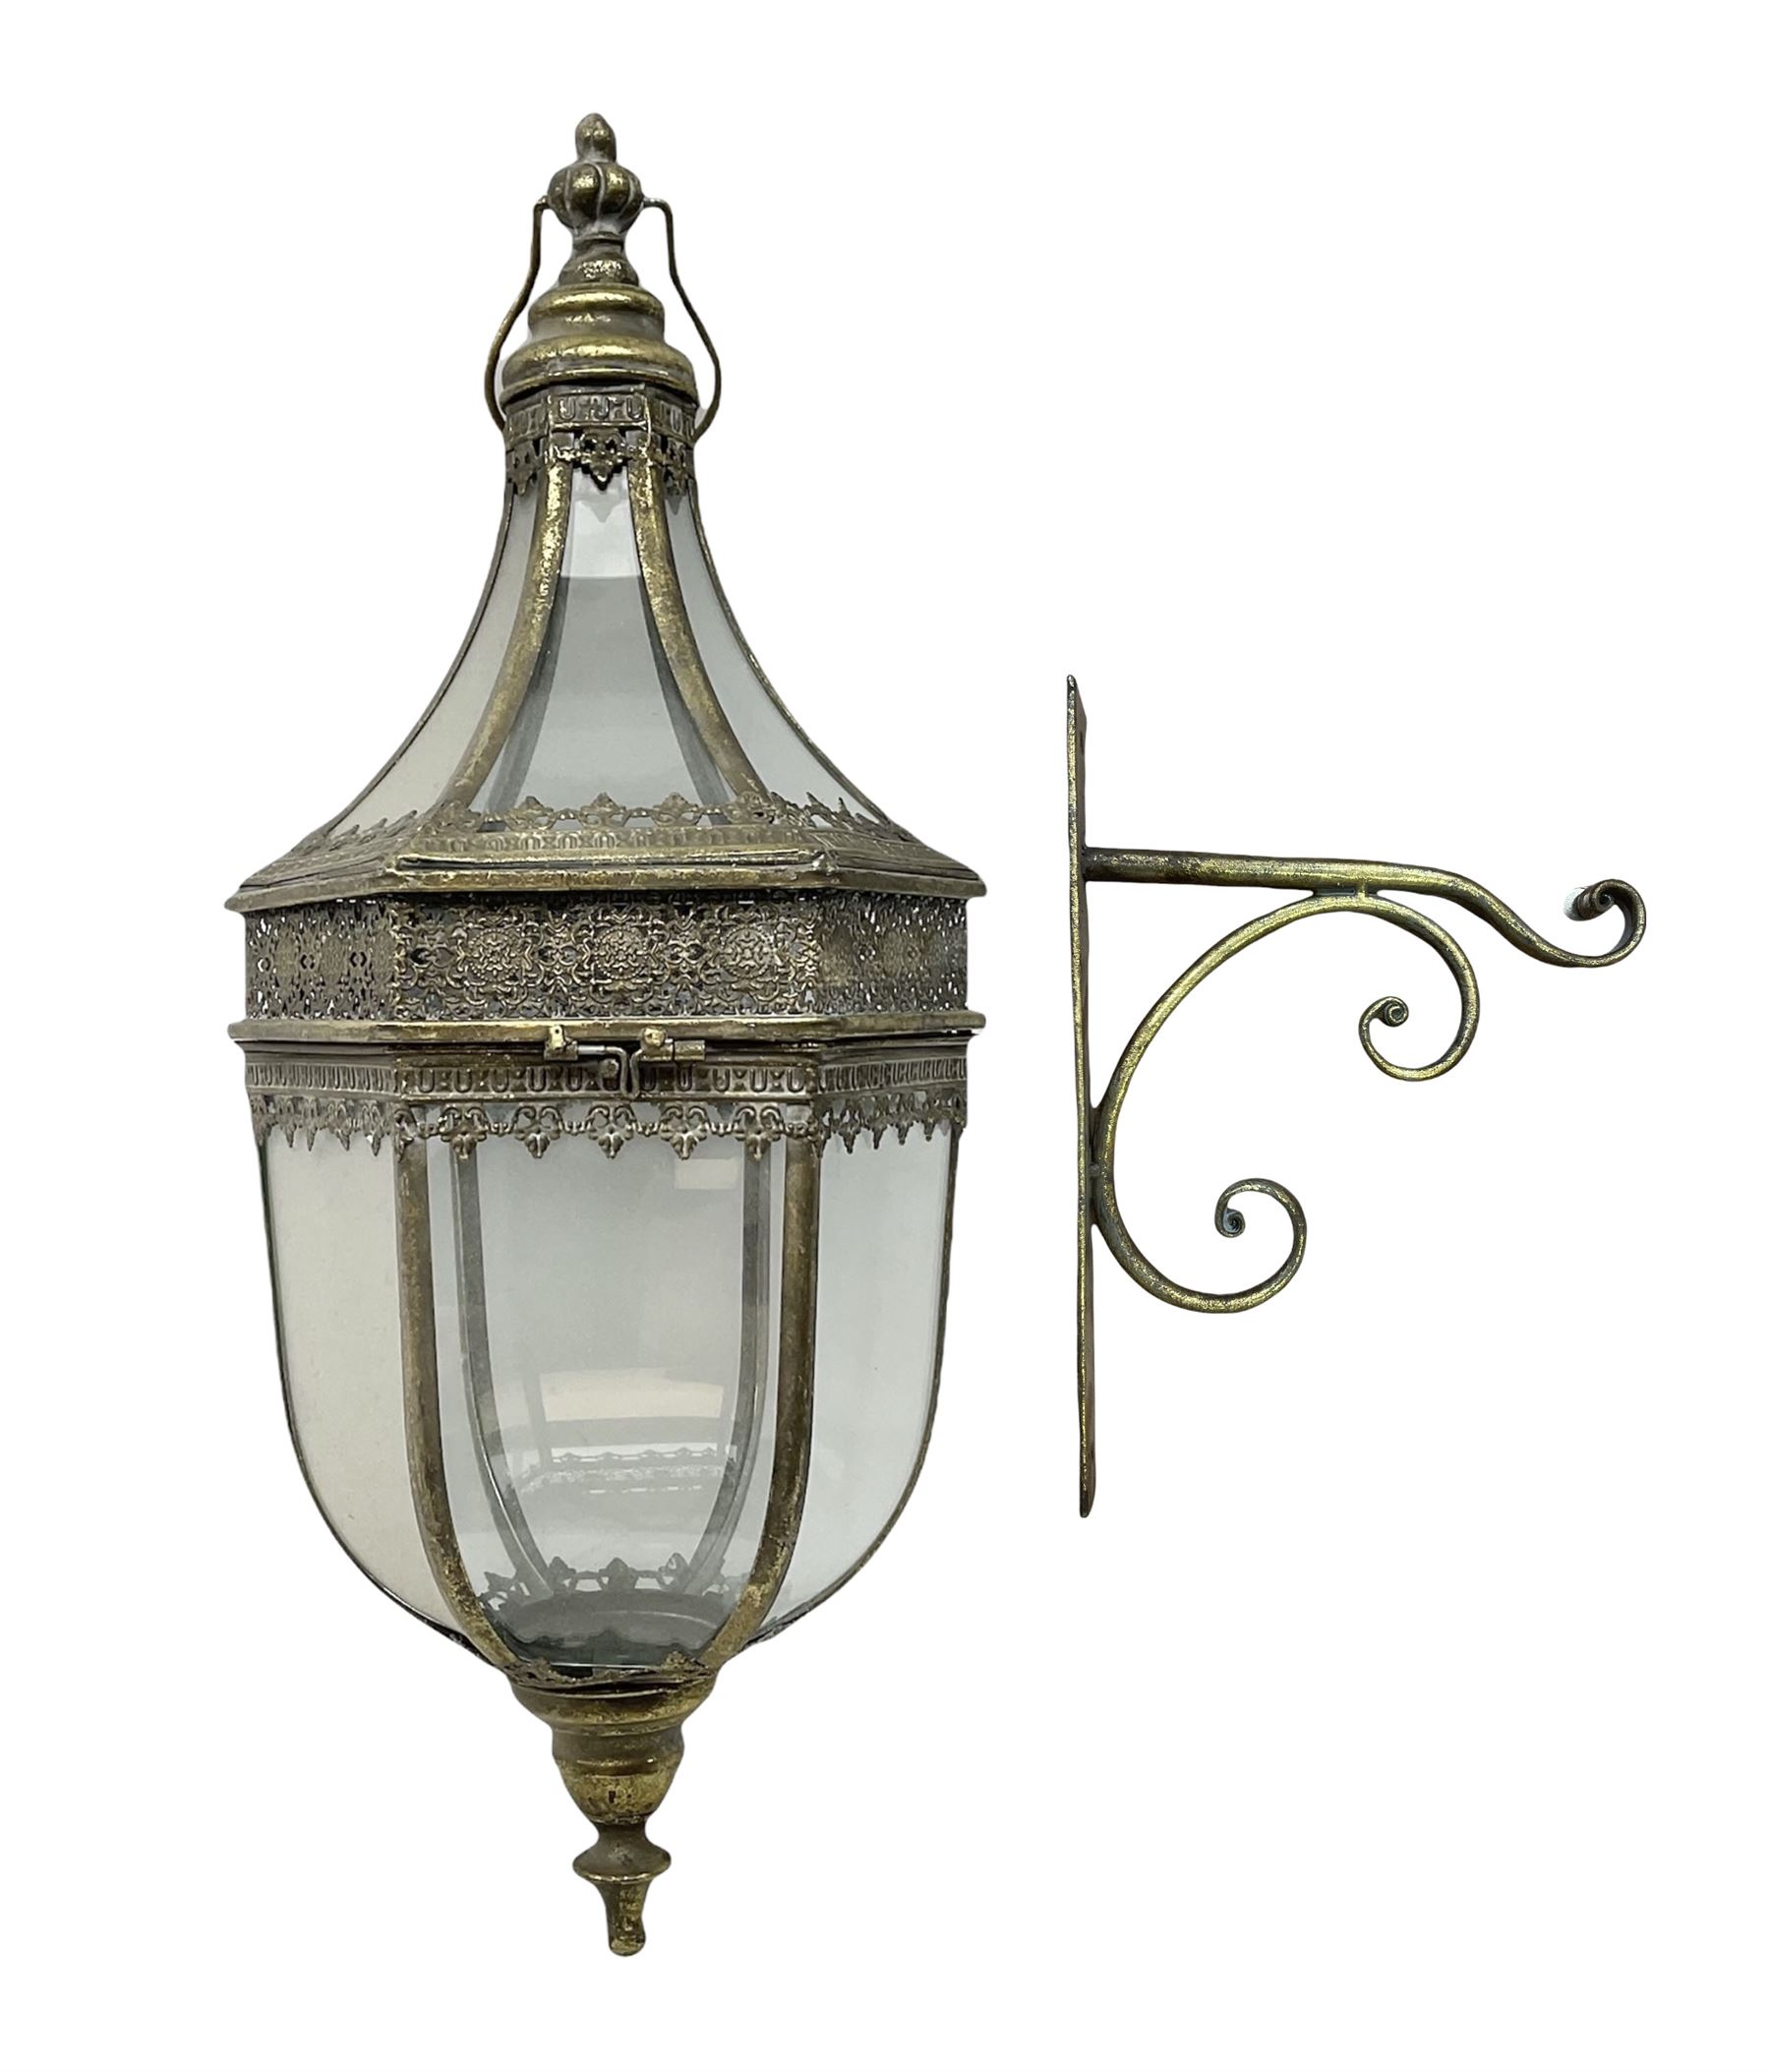 Bronzed finish classical style six sided glass lantern with bracket